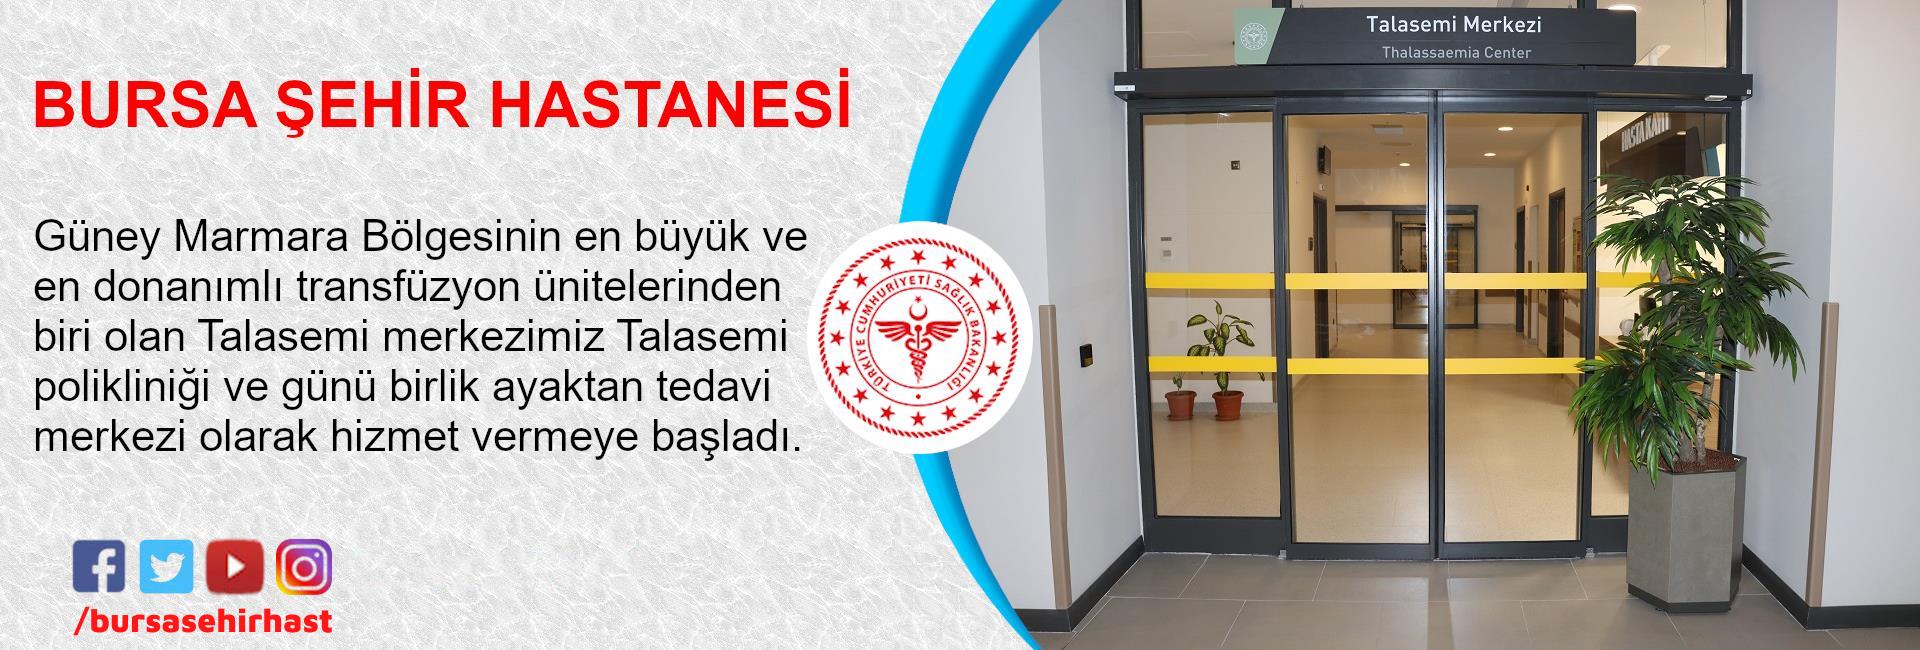 Bursa Şehir Hastanesi_37